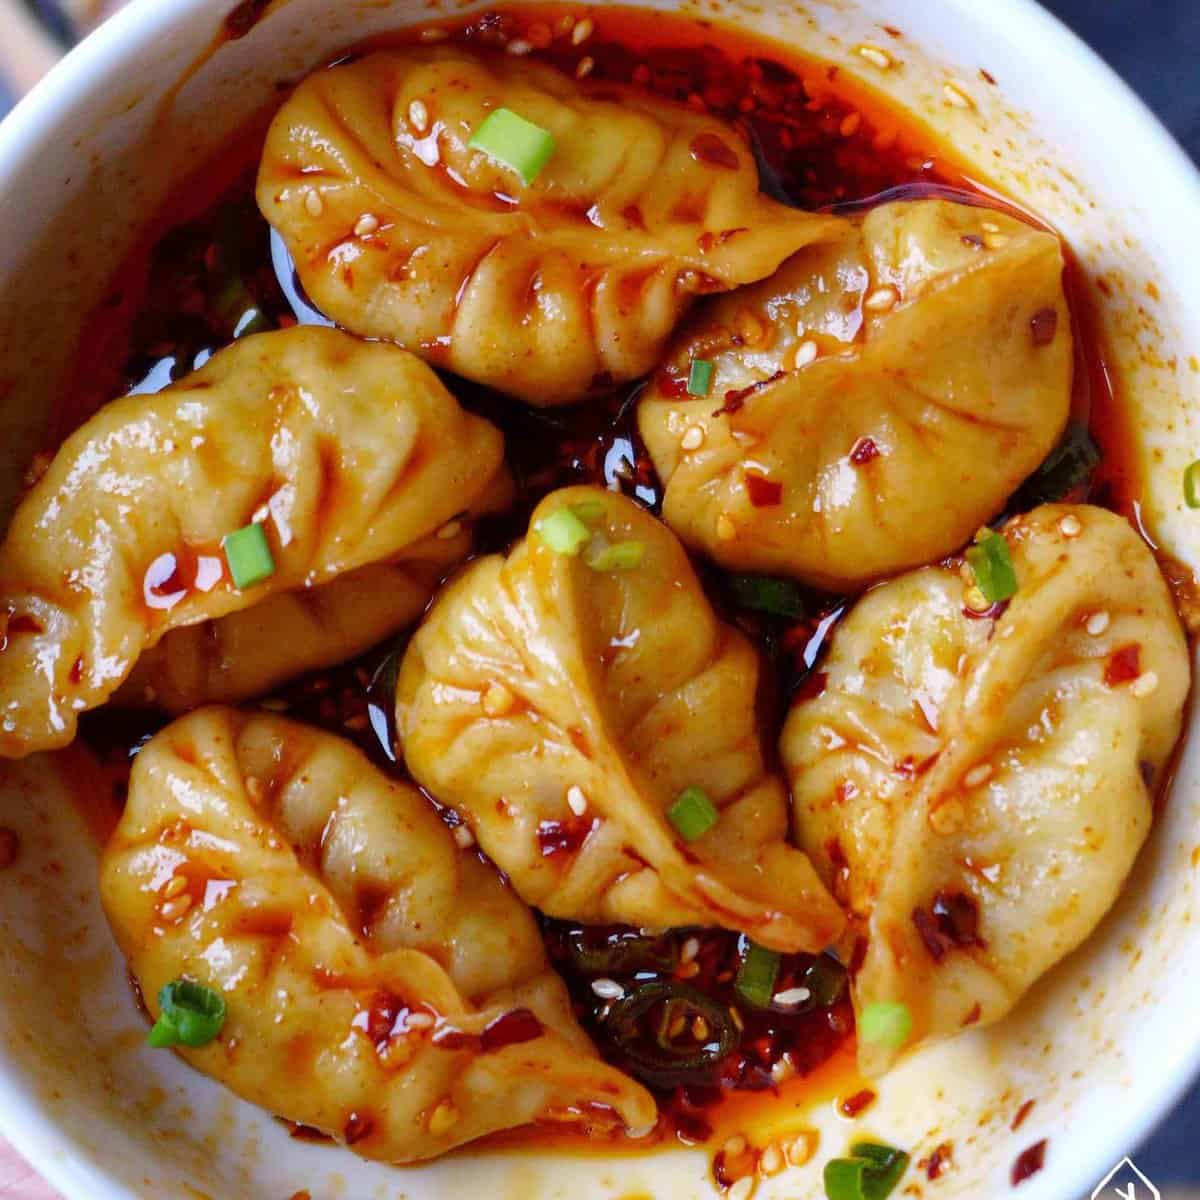 Six dumpling sauces